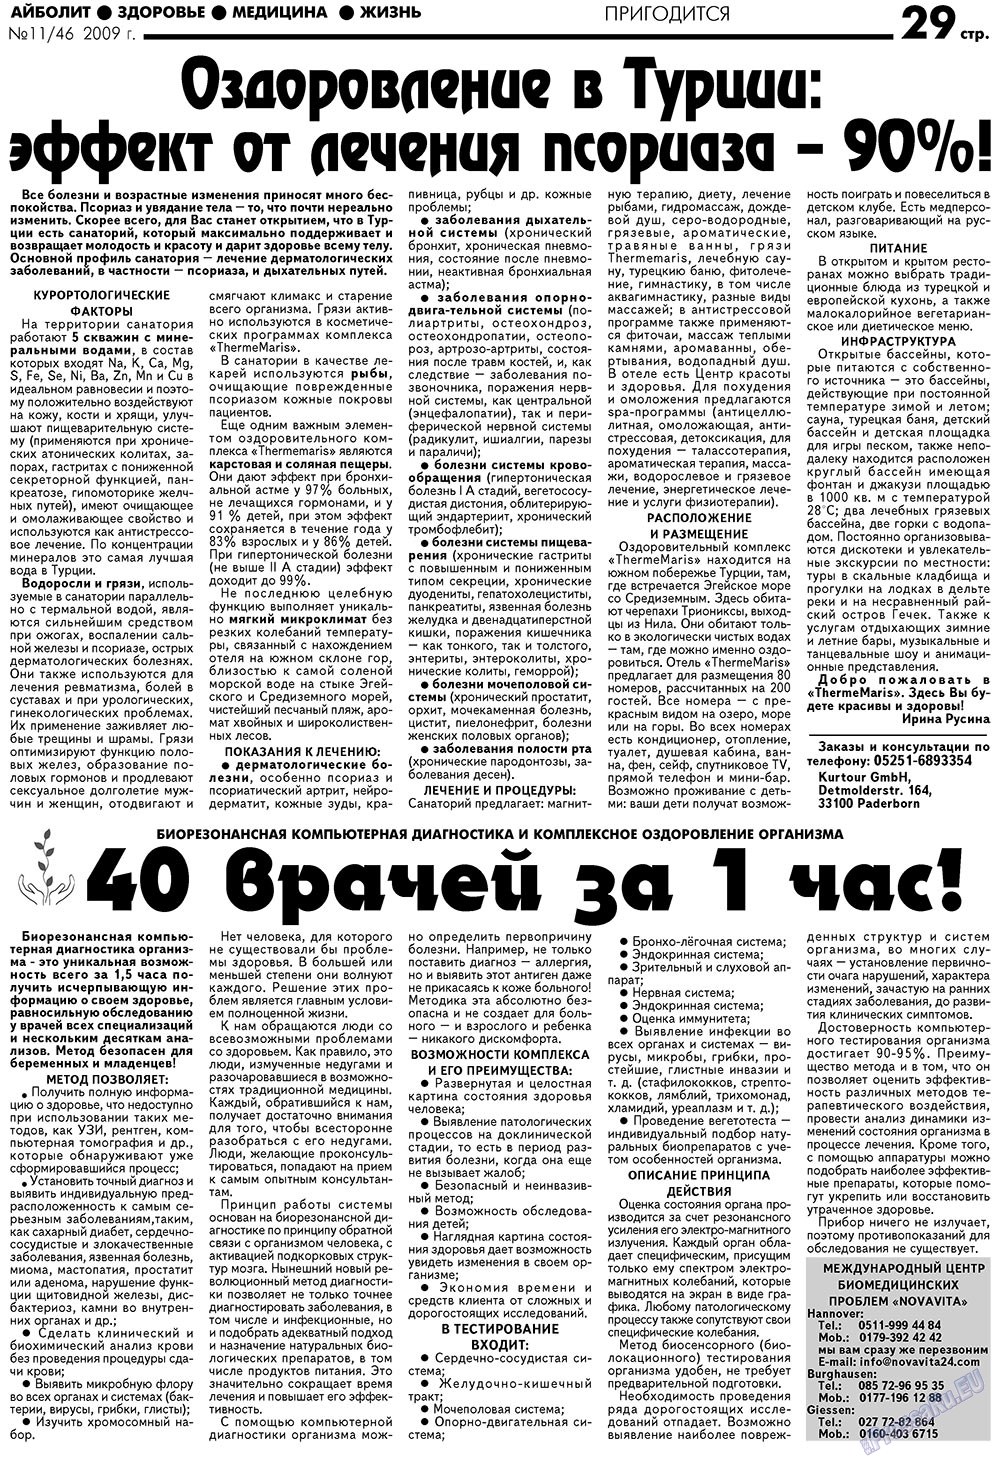 АйБолит (газета). 2009 год, номер 11, стр. 29